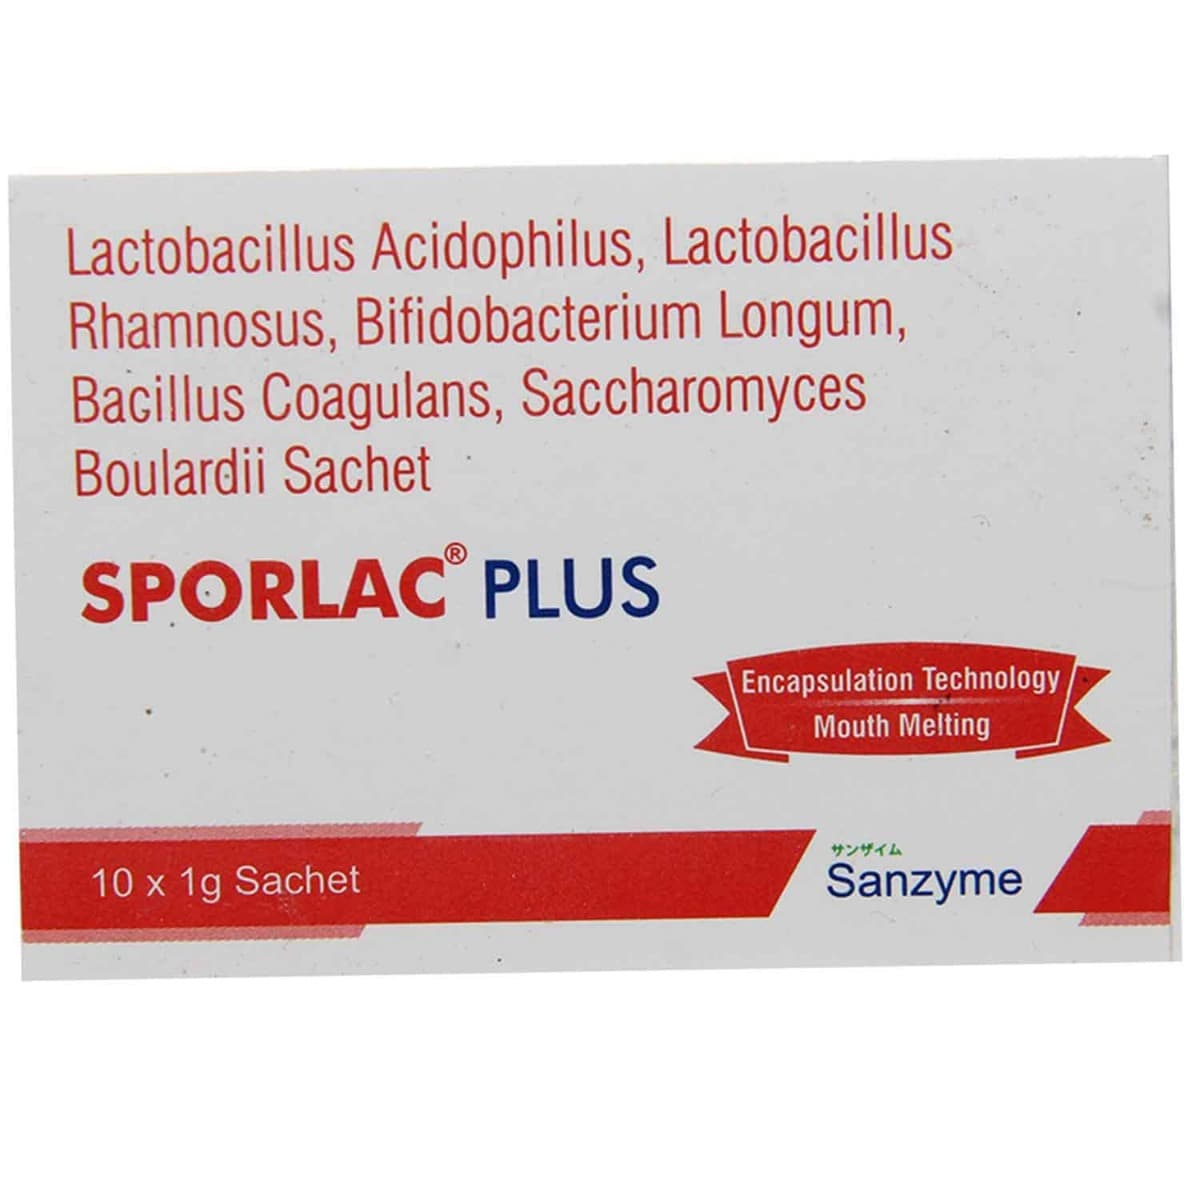 Buy Sporlac Plus Sachet 1 gm Online